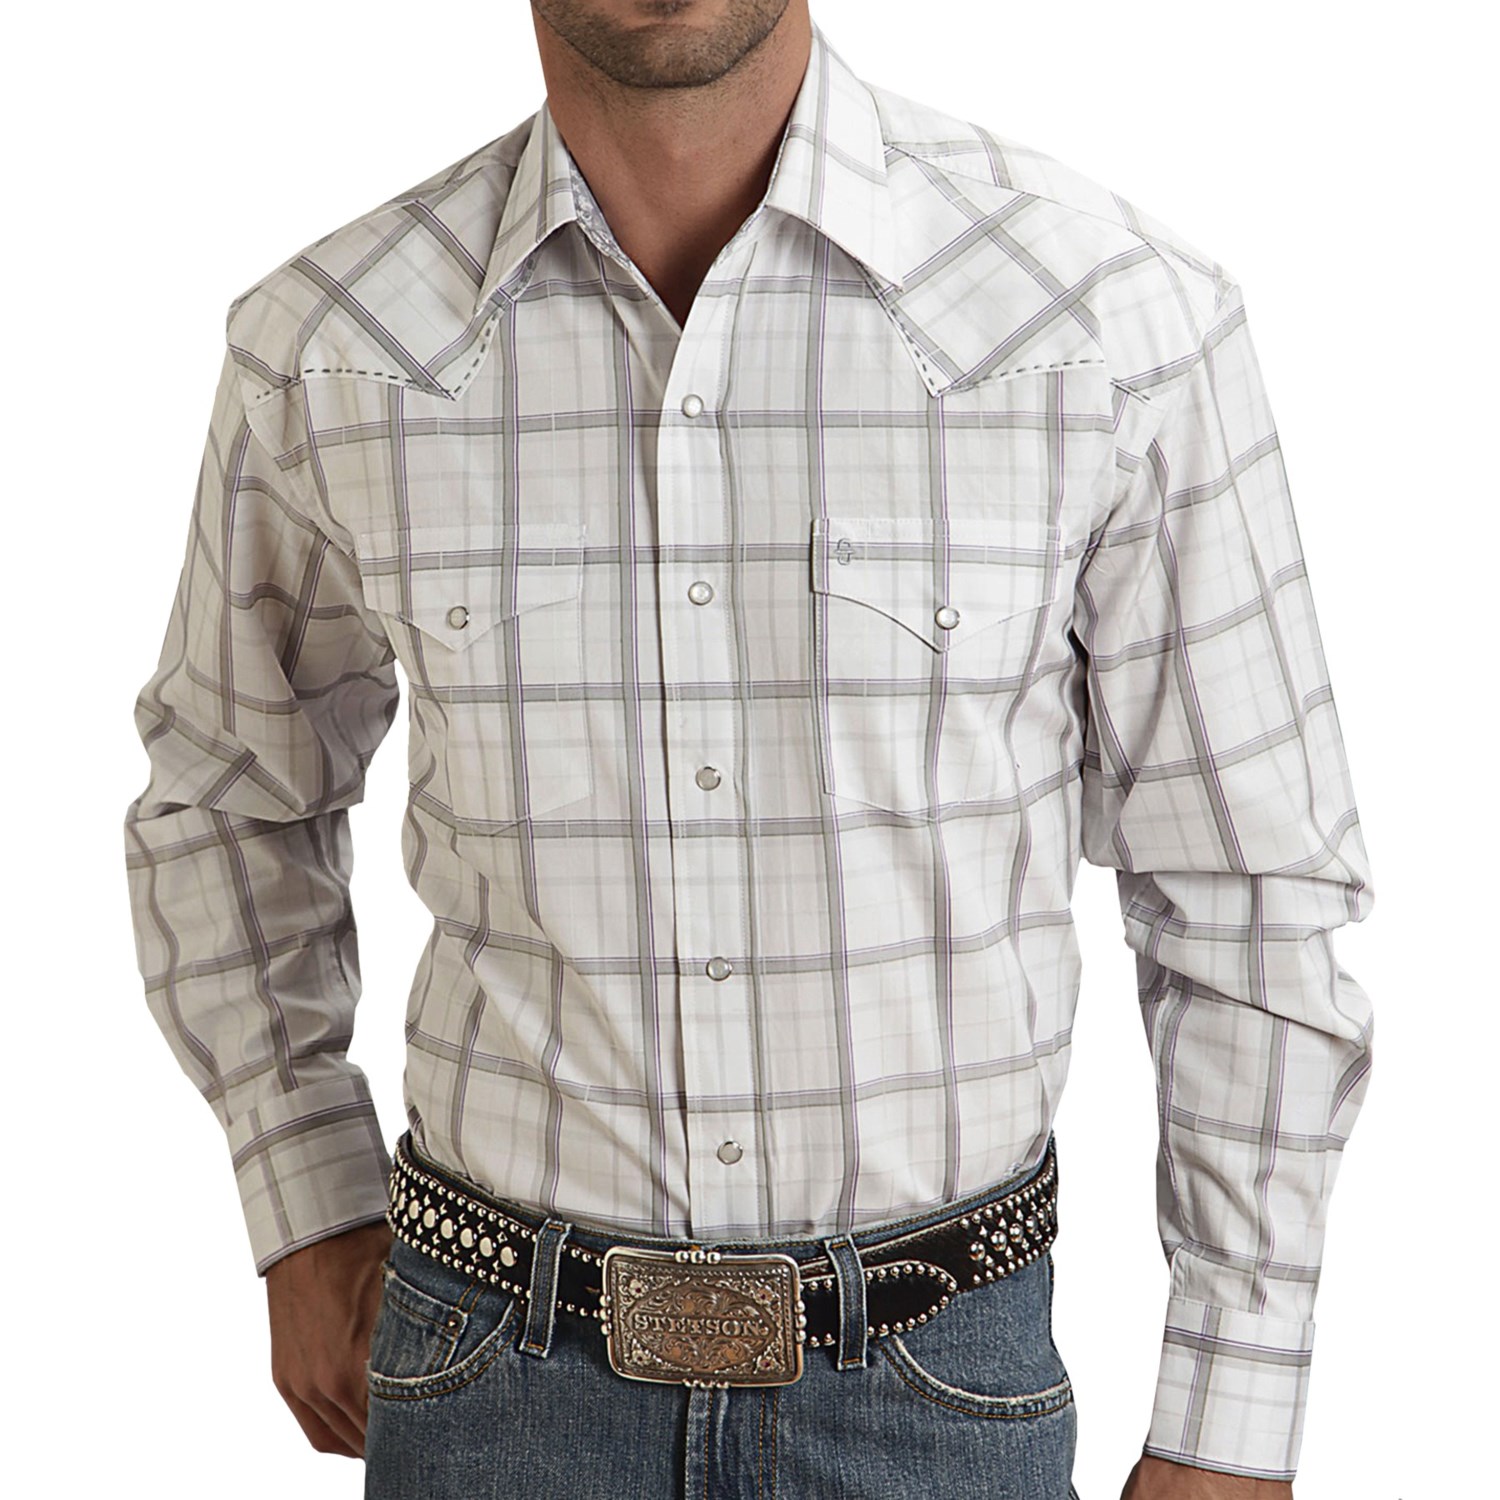 Stetson Plaid Flat Weave Shirt (For Men) 6419H - Save 71%